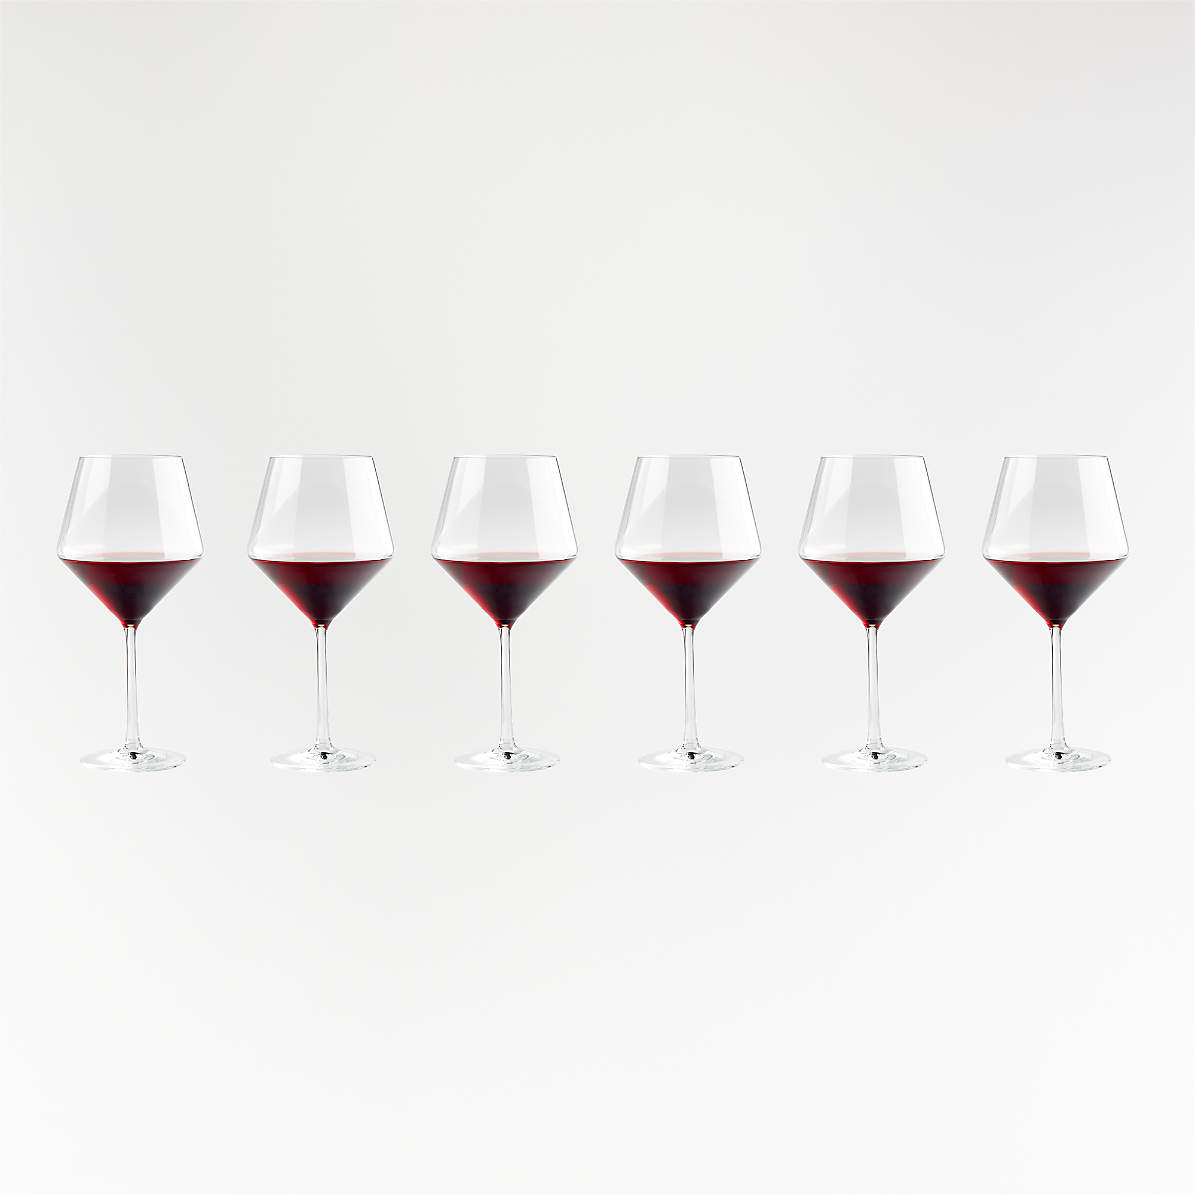 https://cb.scene7.com/is/image/Crate/TourRedWine24ozS6SSS22/$web_pdp_main_carousel_zoom_med$/230202100256/tour-red-wine-glasses-set-of-6.jpg